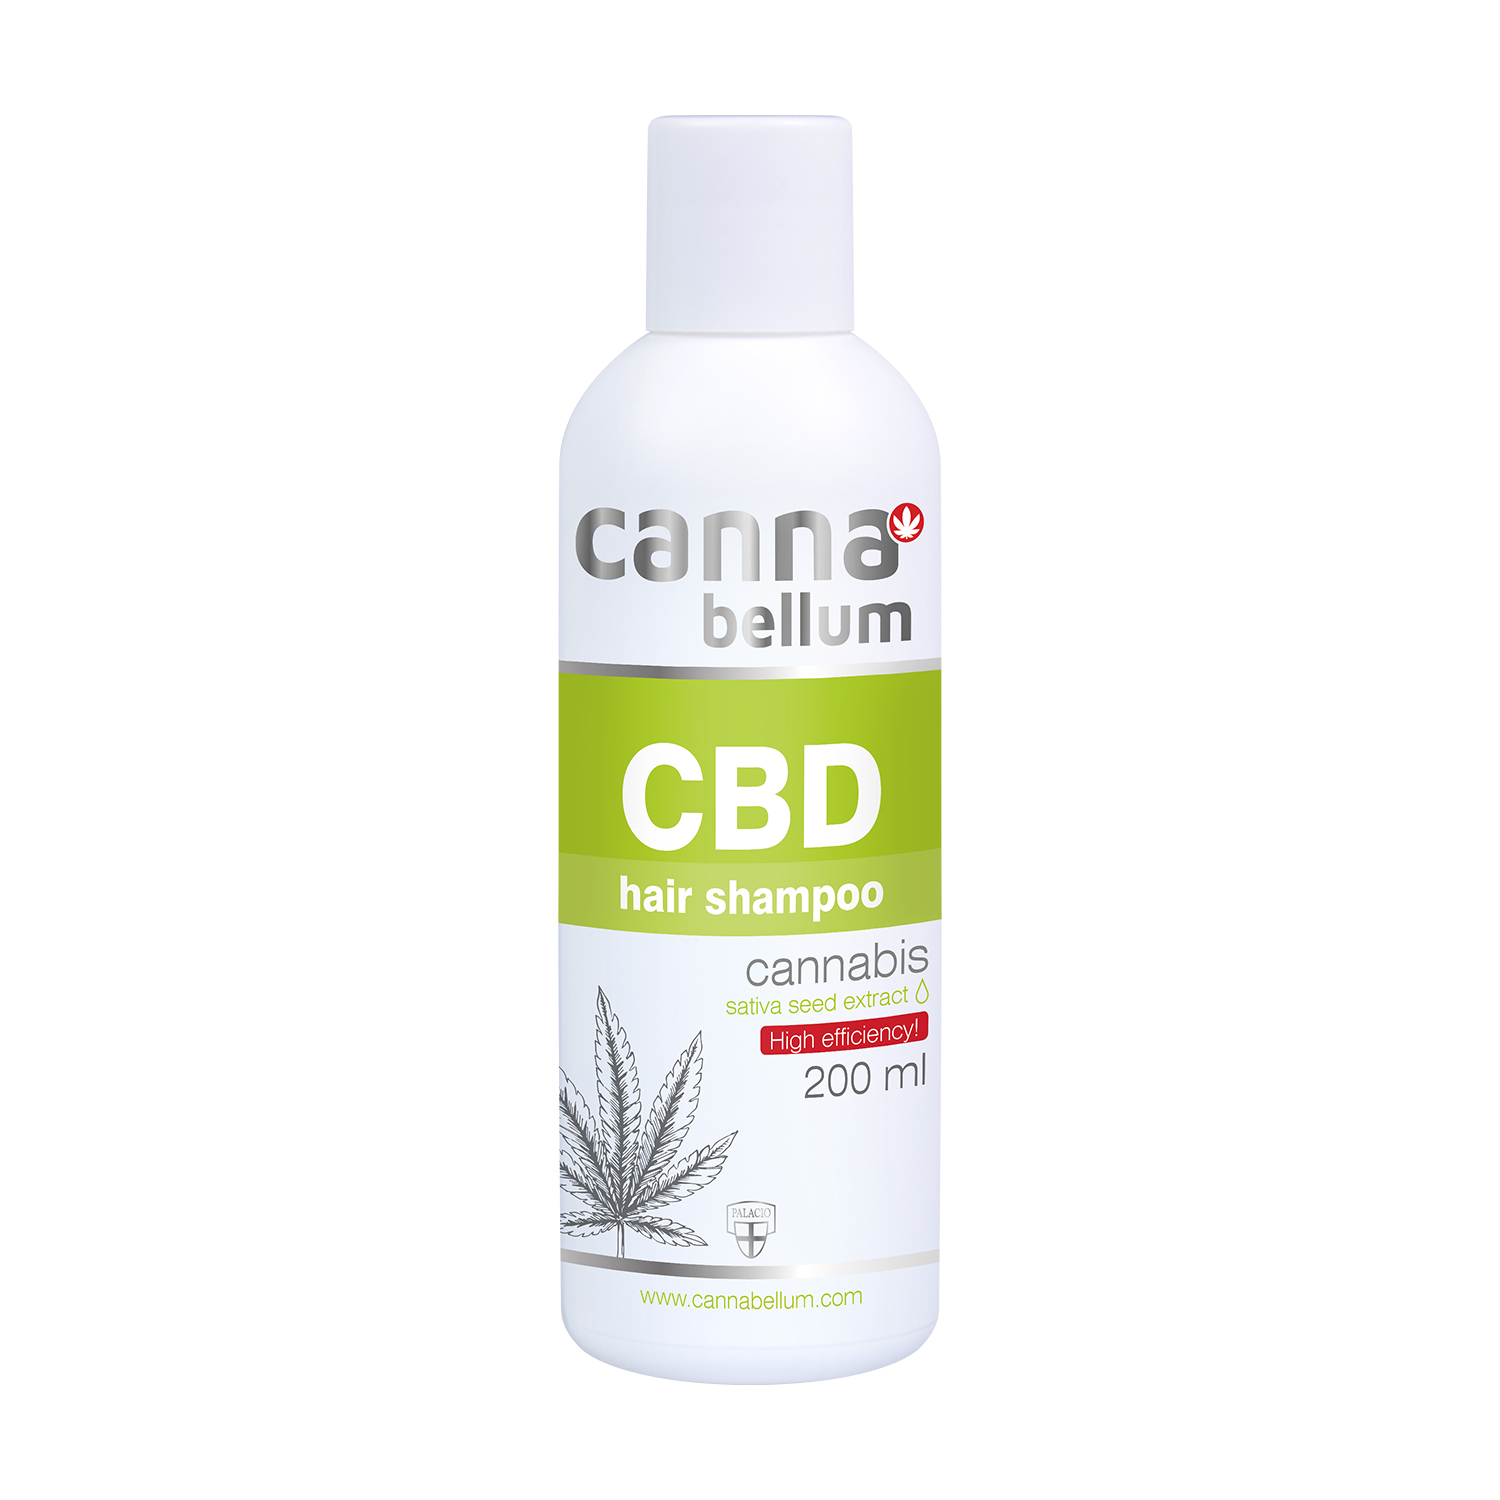 Cannabellum CBD hair shampoo 200ml P1251 WEB 107